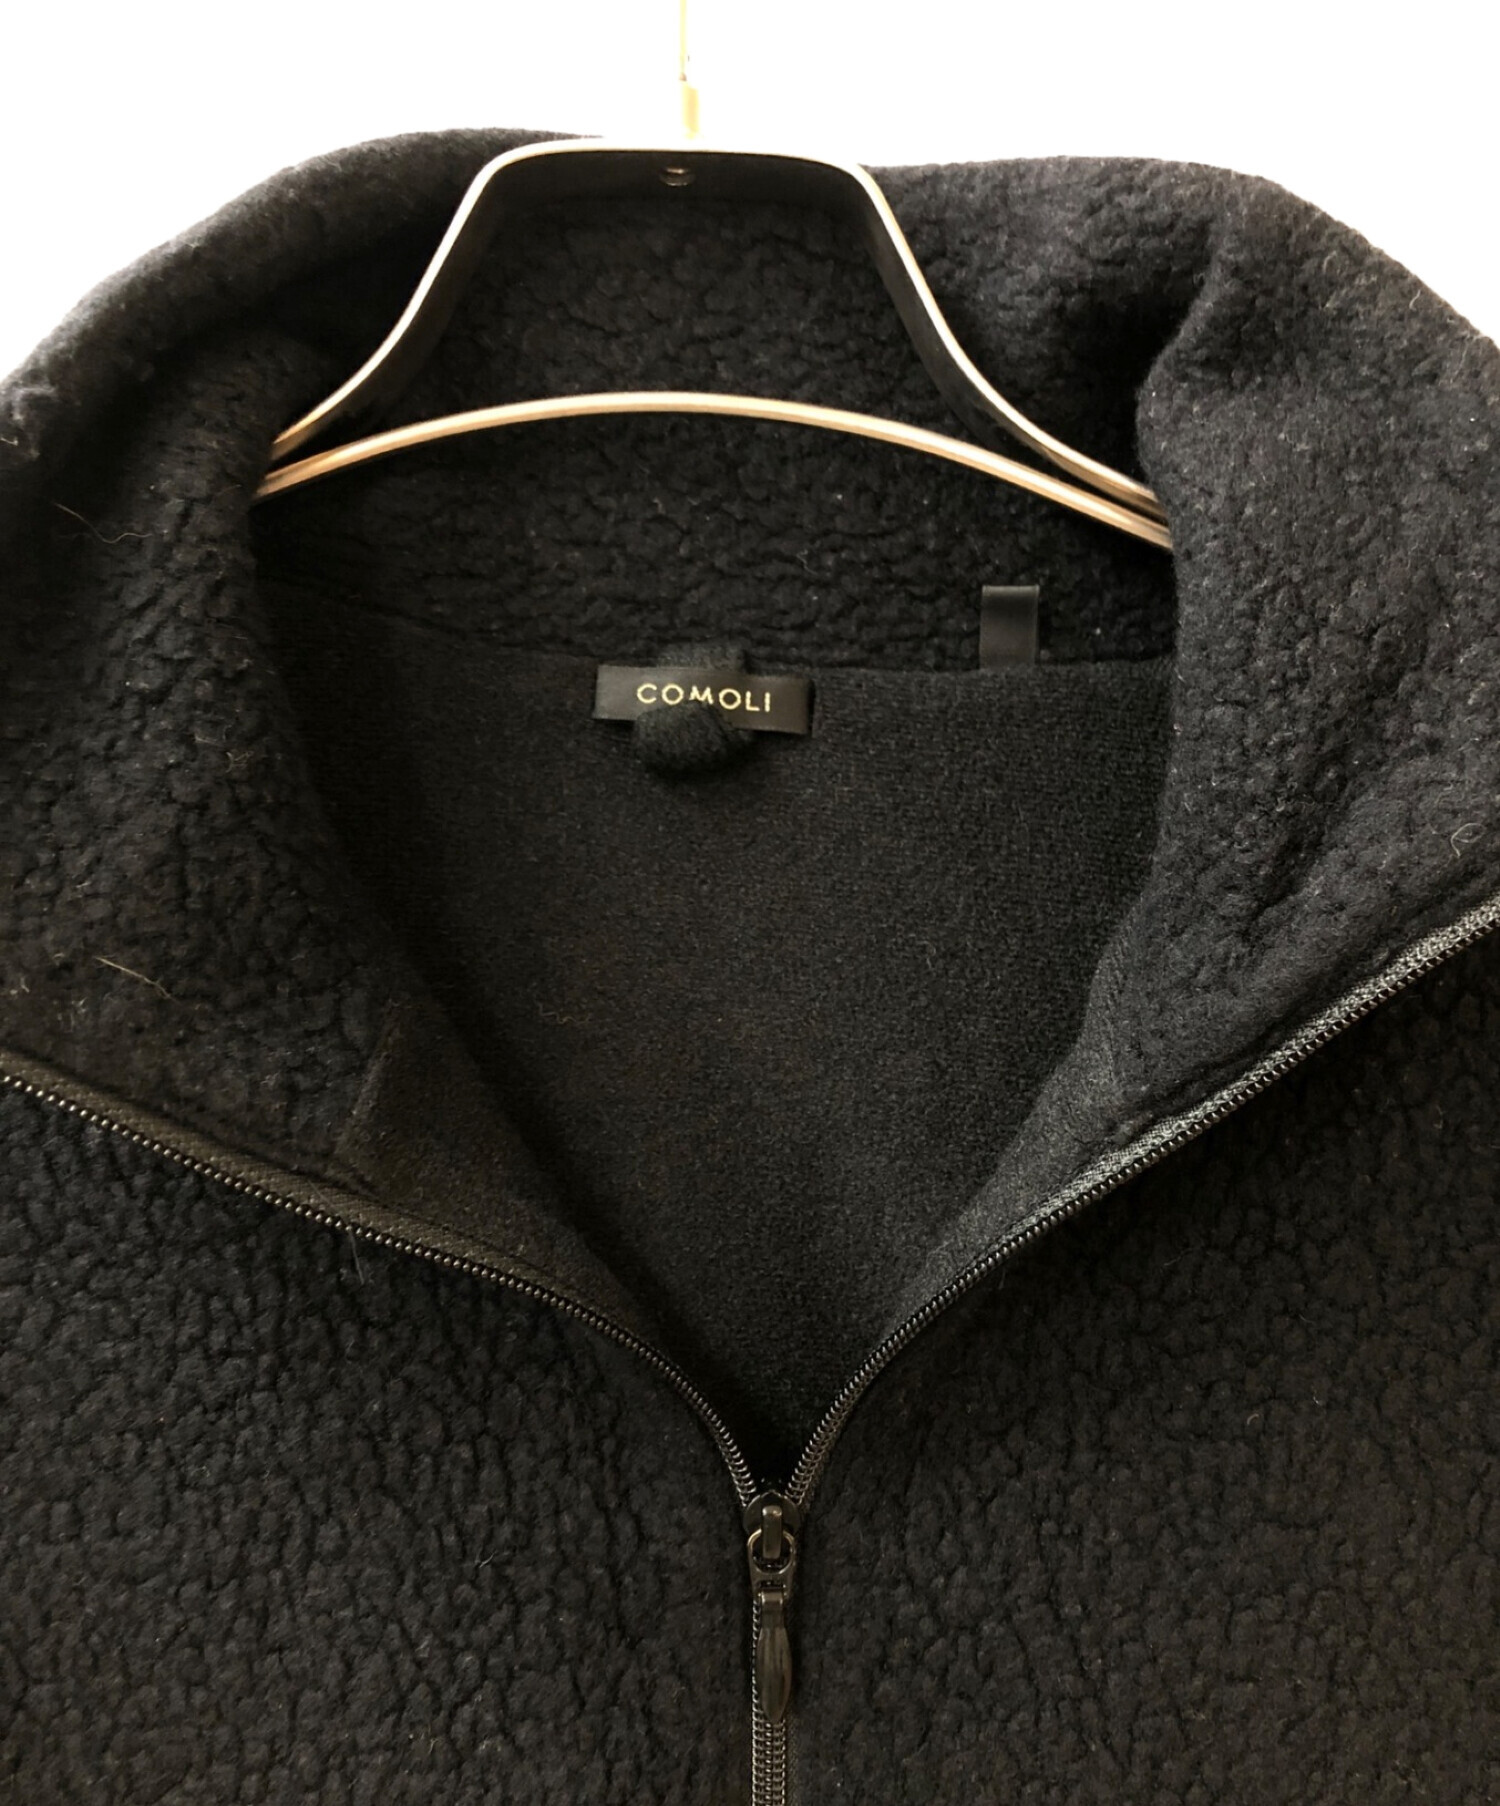 comoli (コモリ) ウールフリースジップアップジャケット ブラック サイズ:2